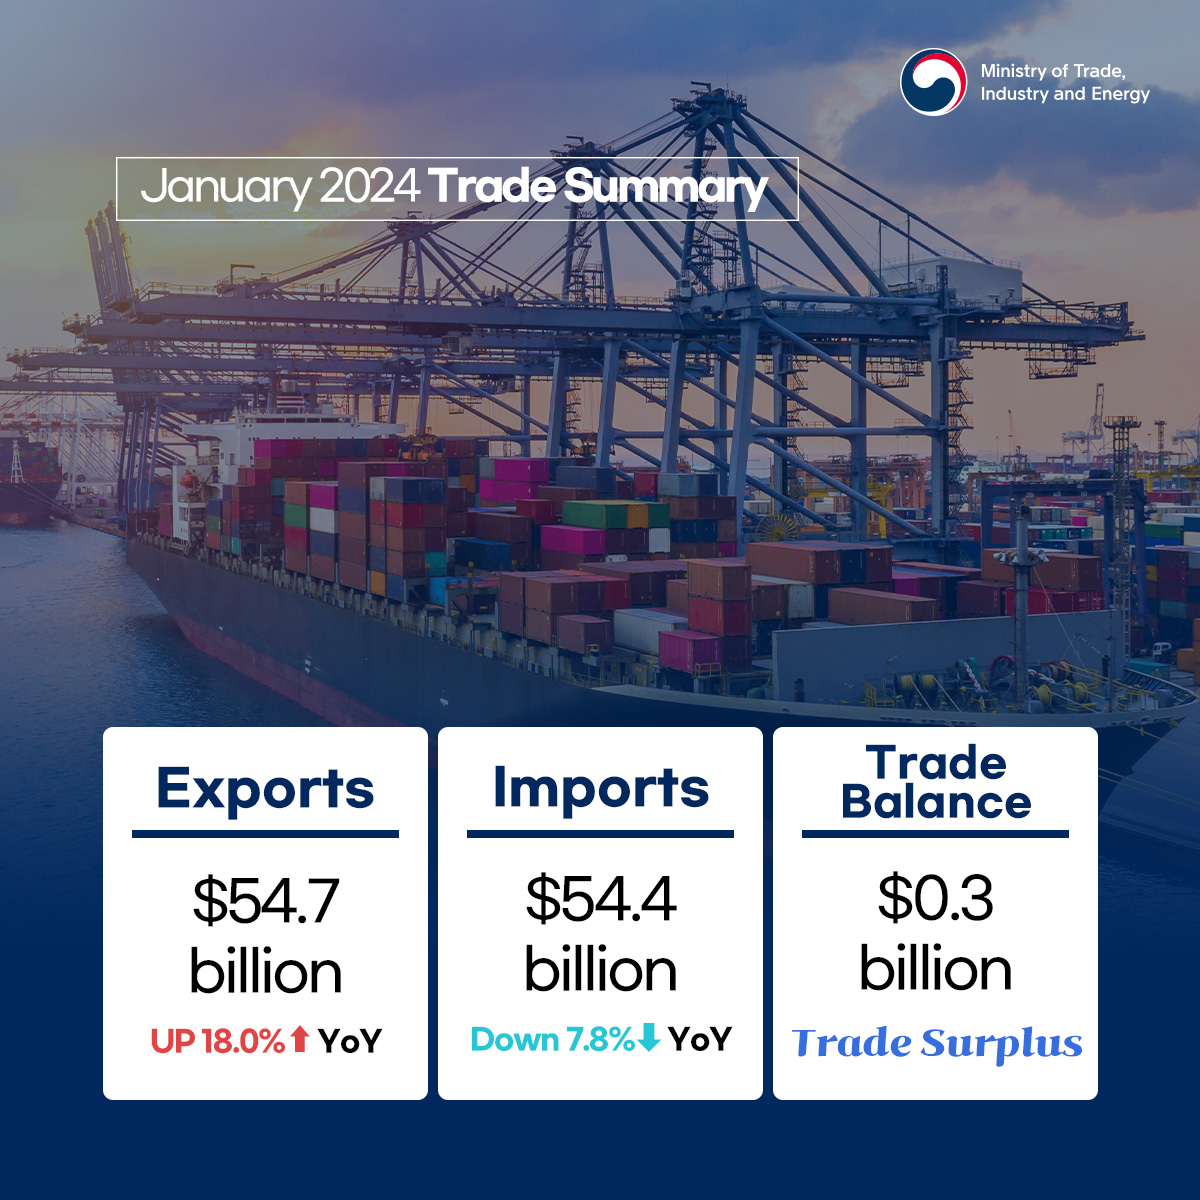 Ministry of Trade, Industry and Energy
January 2024 Trade Summary
Exports, $54.7 billion, UP 18.0% YoY
Imports, $54.4 billion, Down 7.8% YoY
Trade Balance, $0.3 billion, Trade Surplus